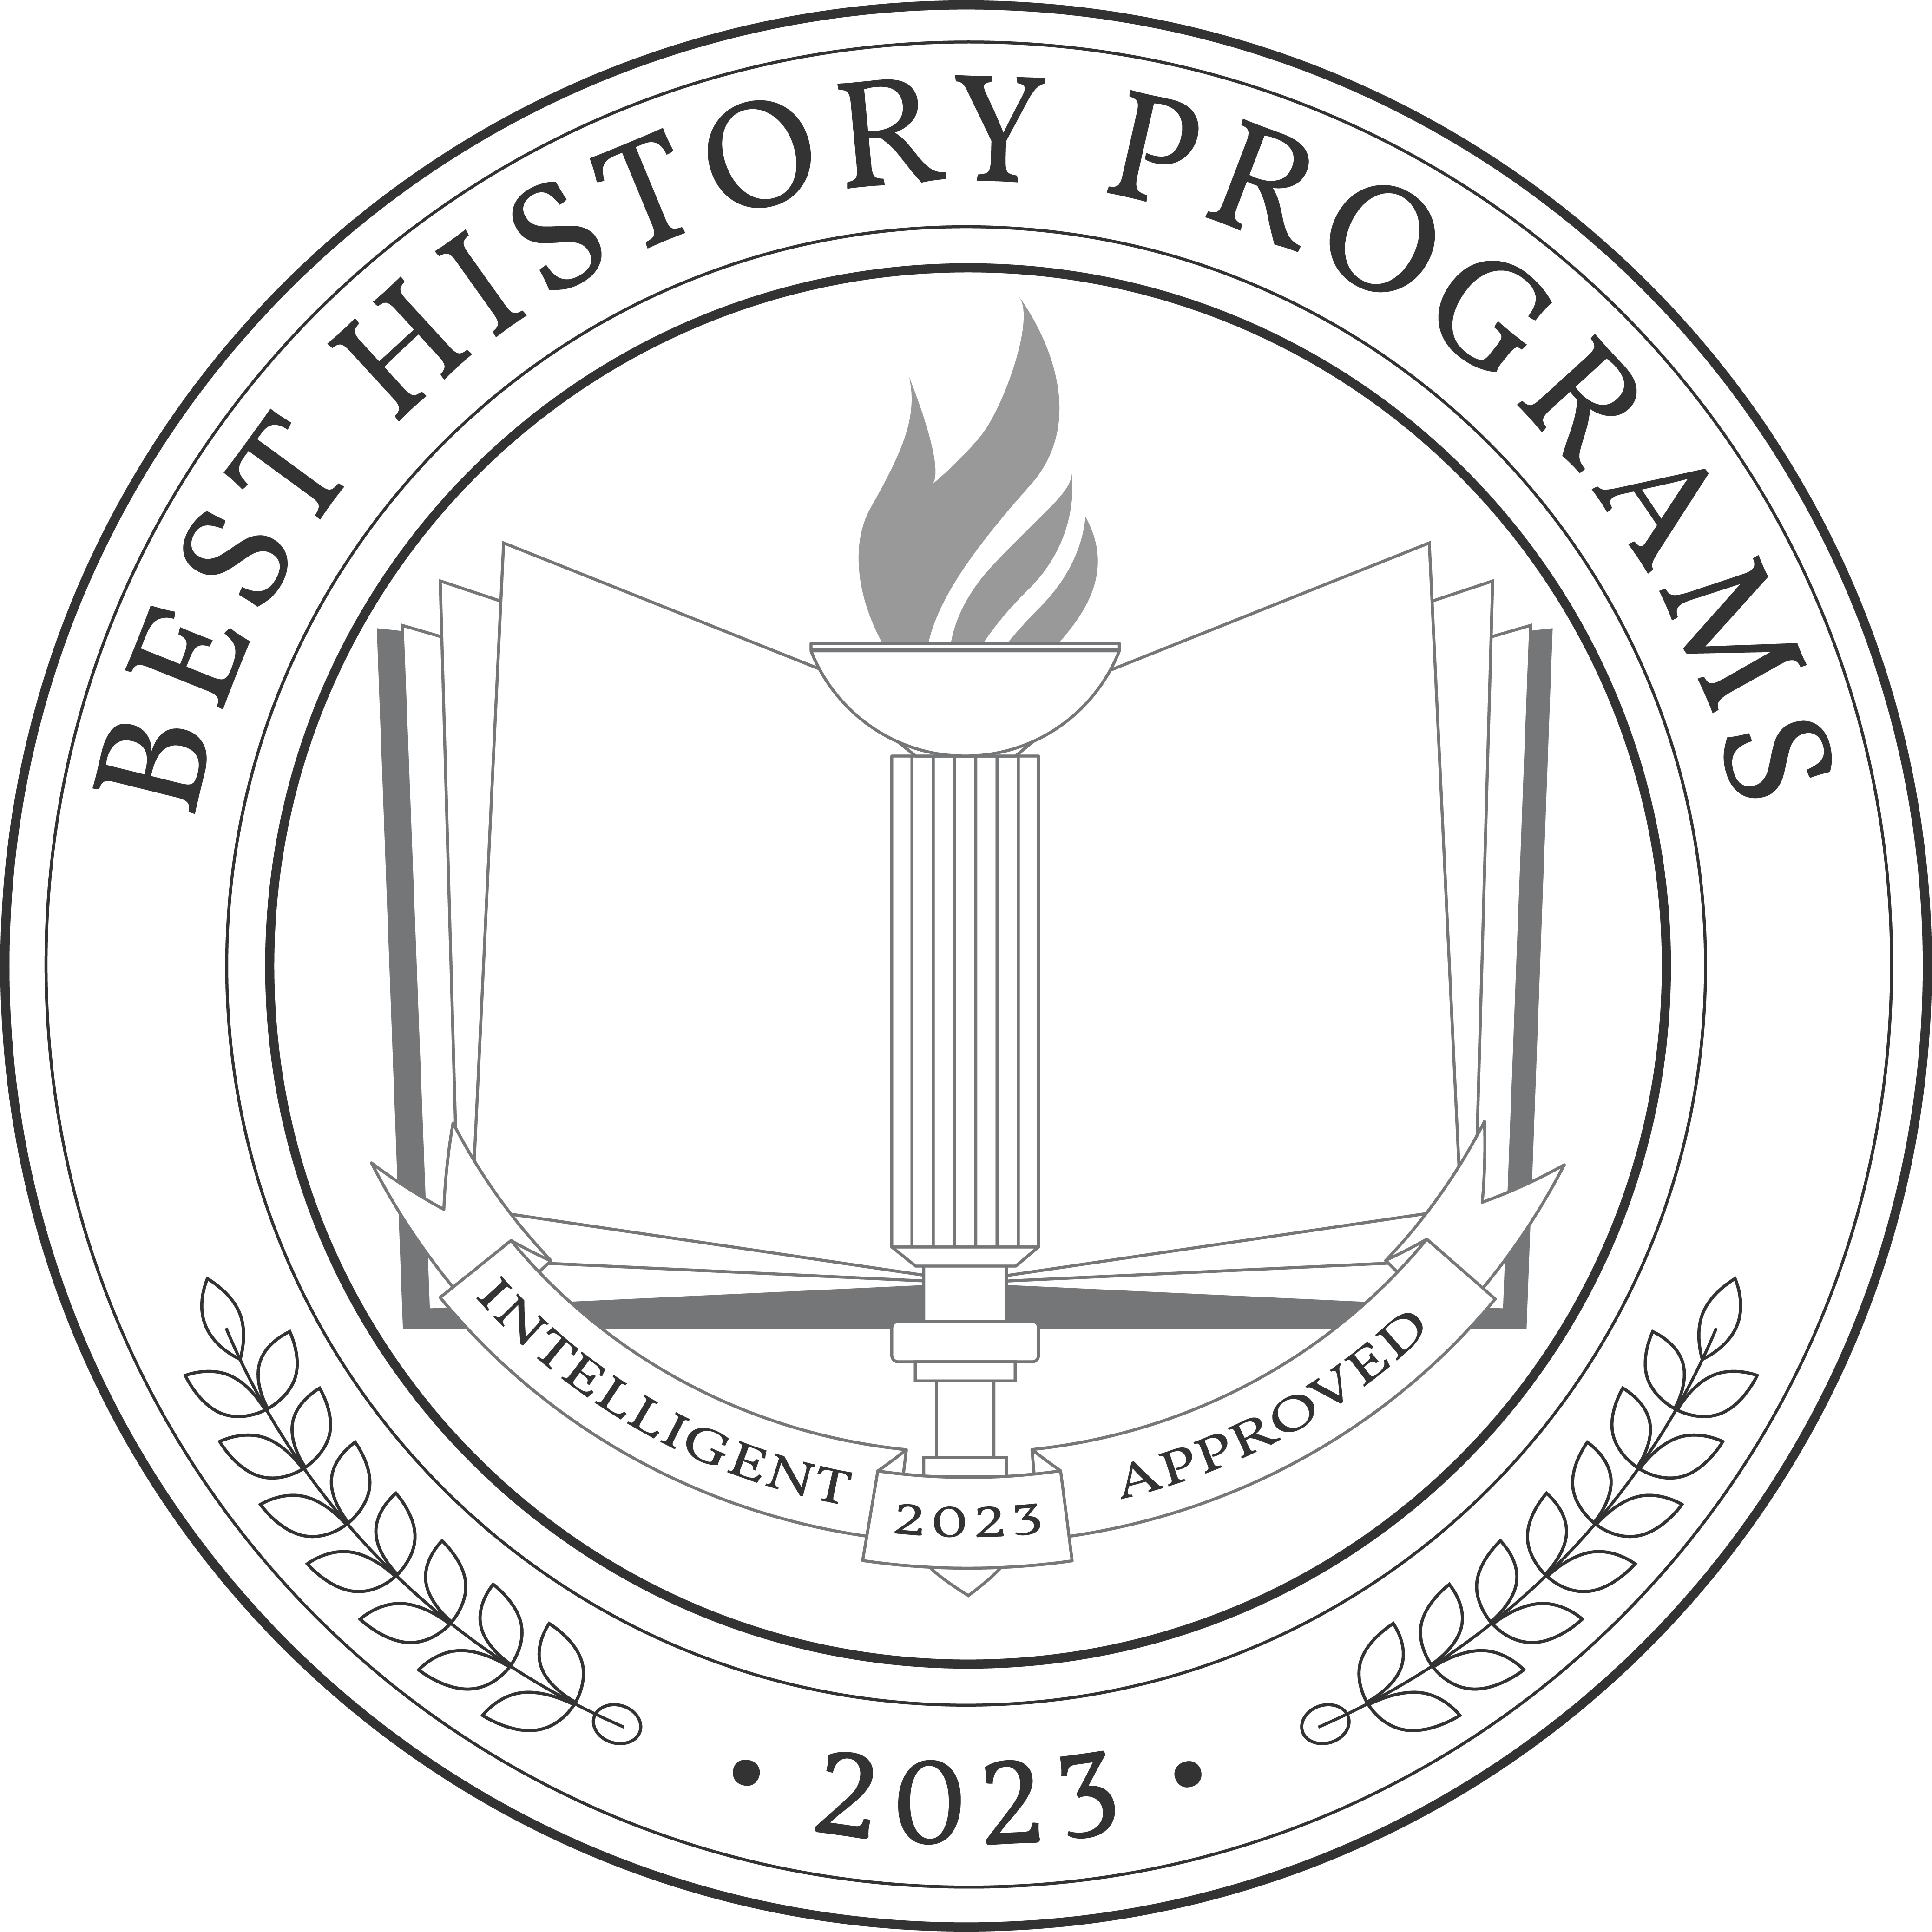 Best History Programs badge